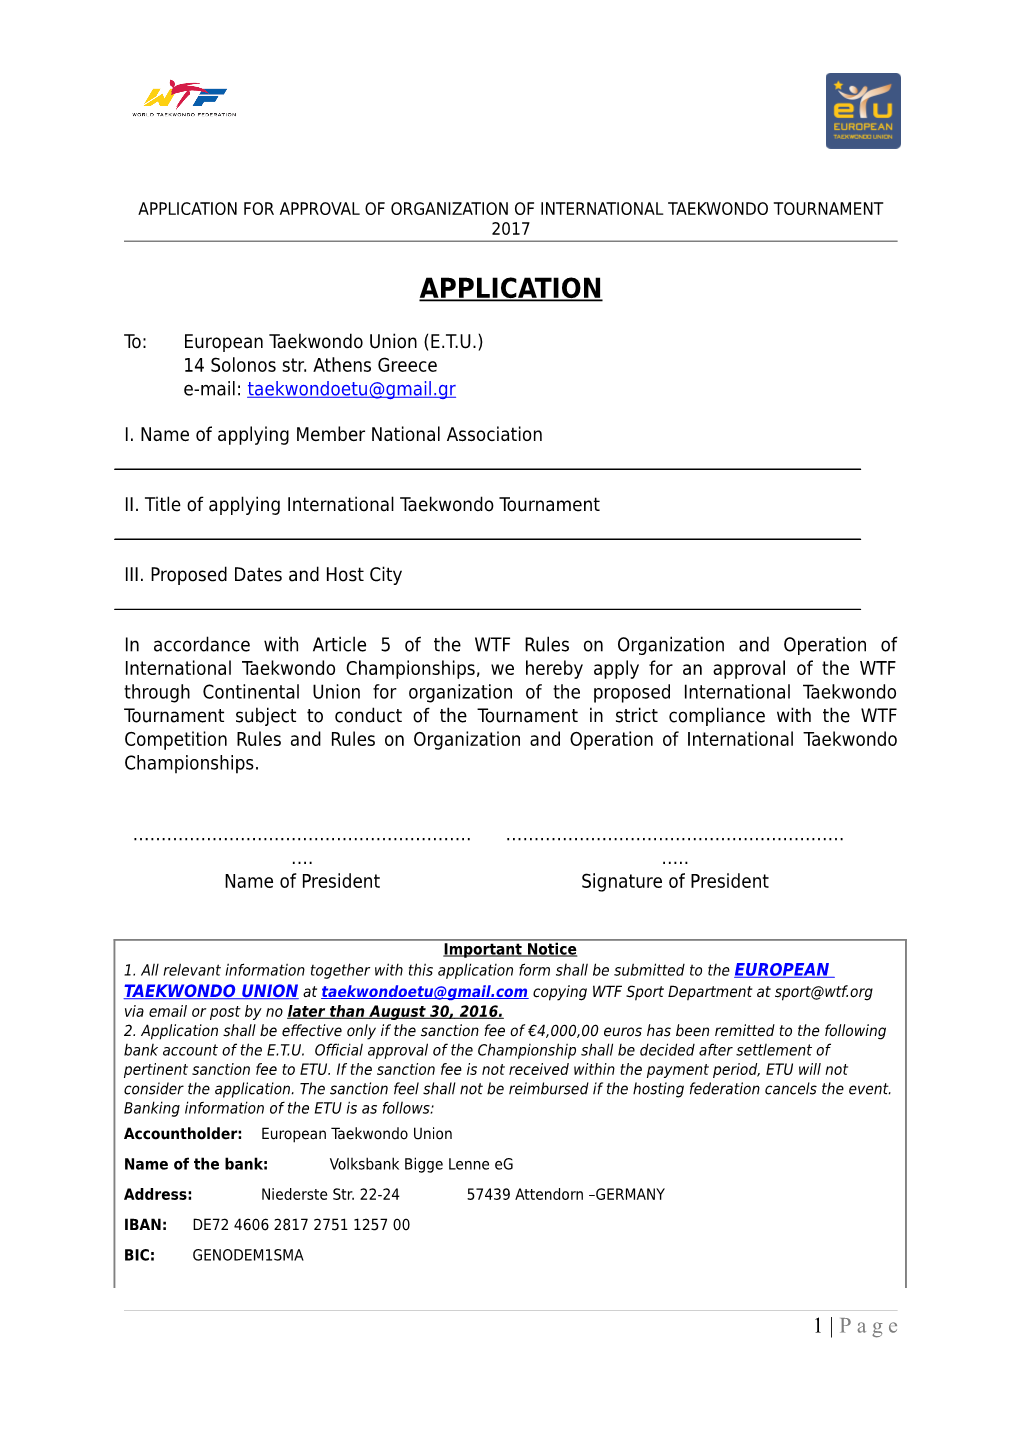 Application for Approval of Organization of International Taekwondo Tournament 2017